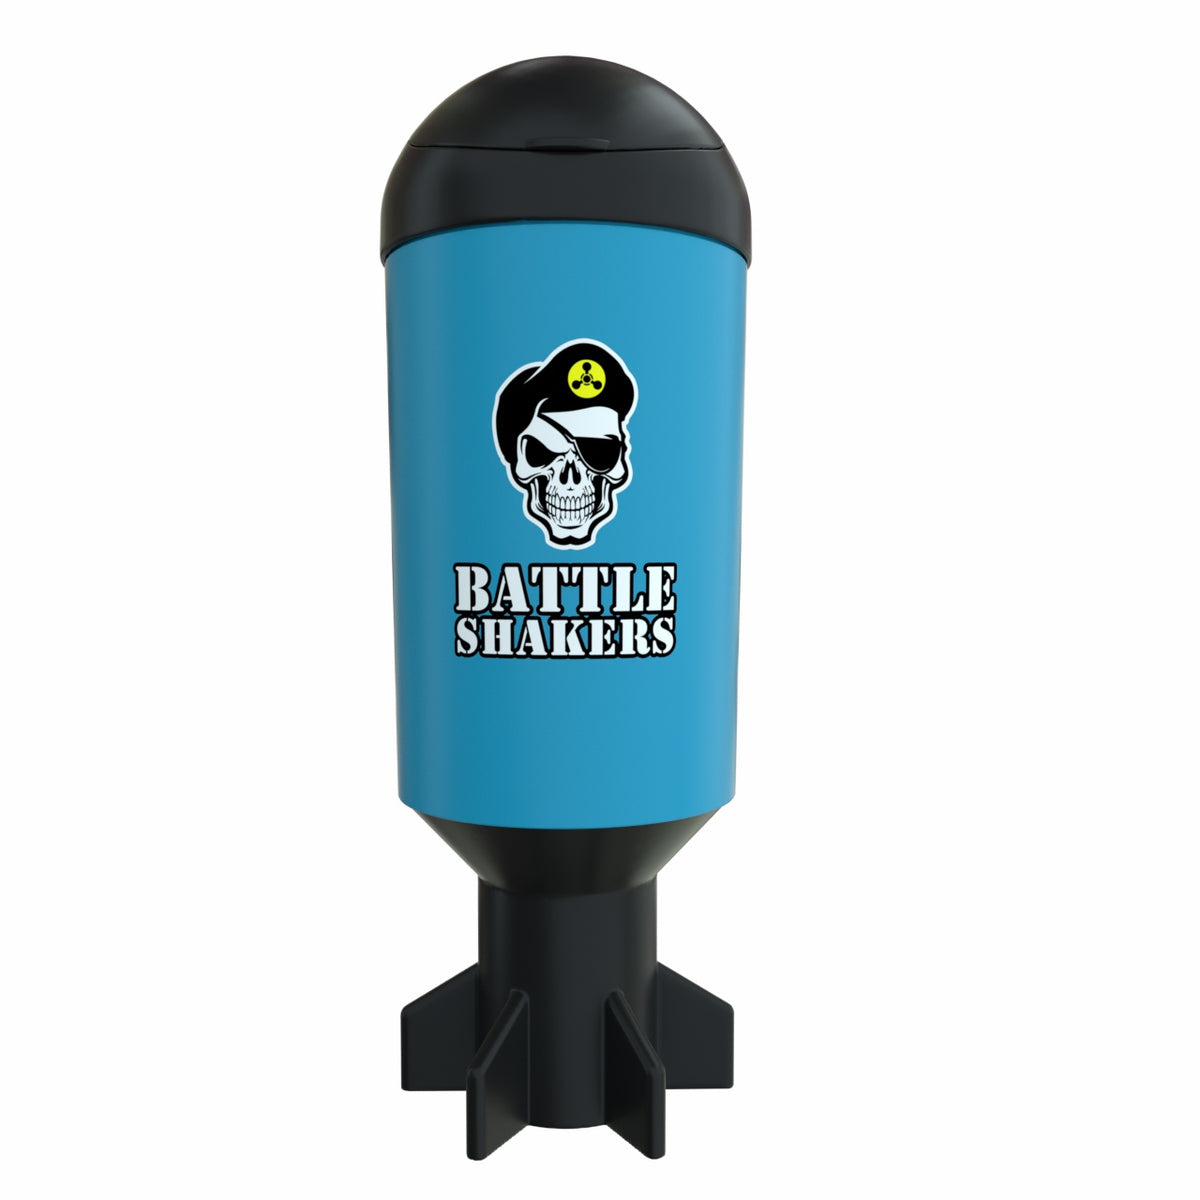 BATTLE SHAKER BOMB - The next generation in shaker bottle designs